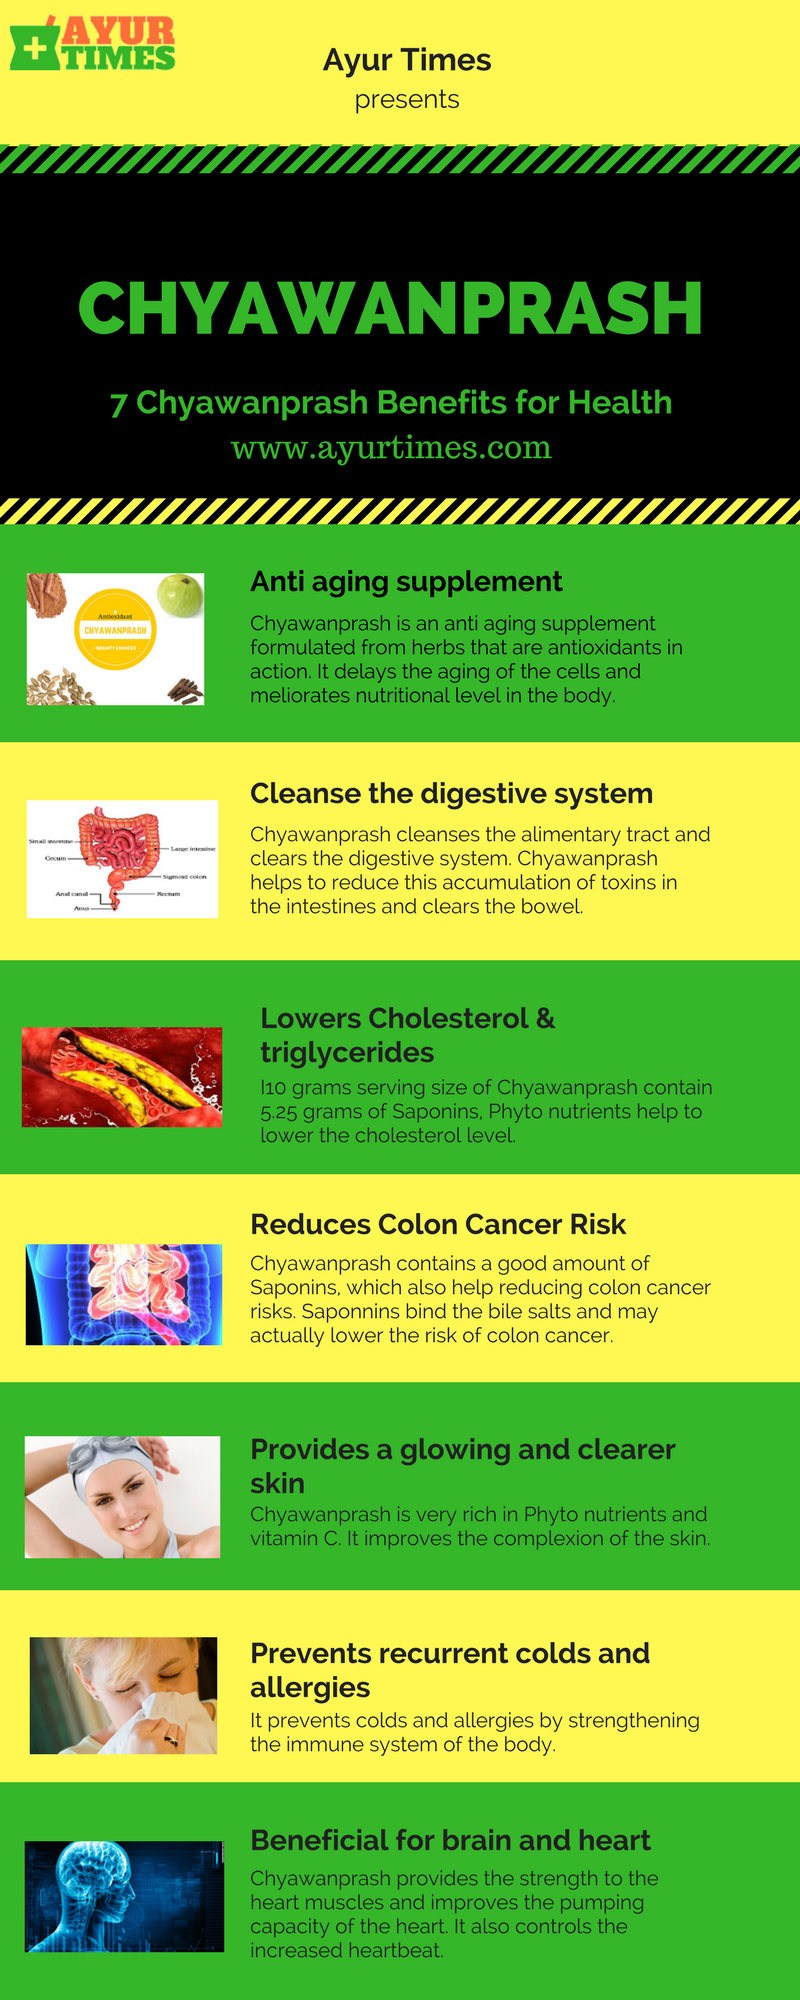 7 Chyawanprash Benefits for Health | by Ayur Times | Medium